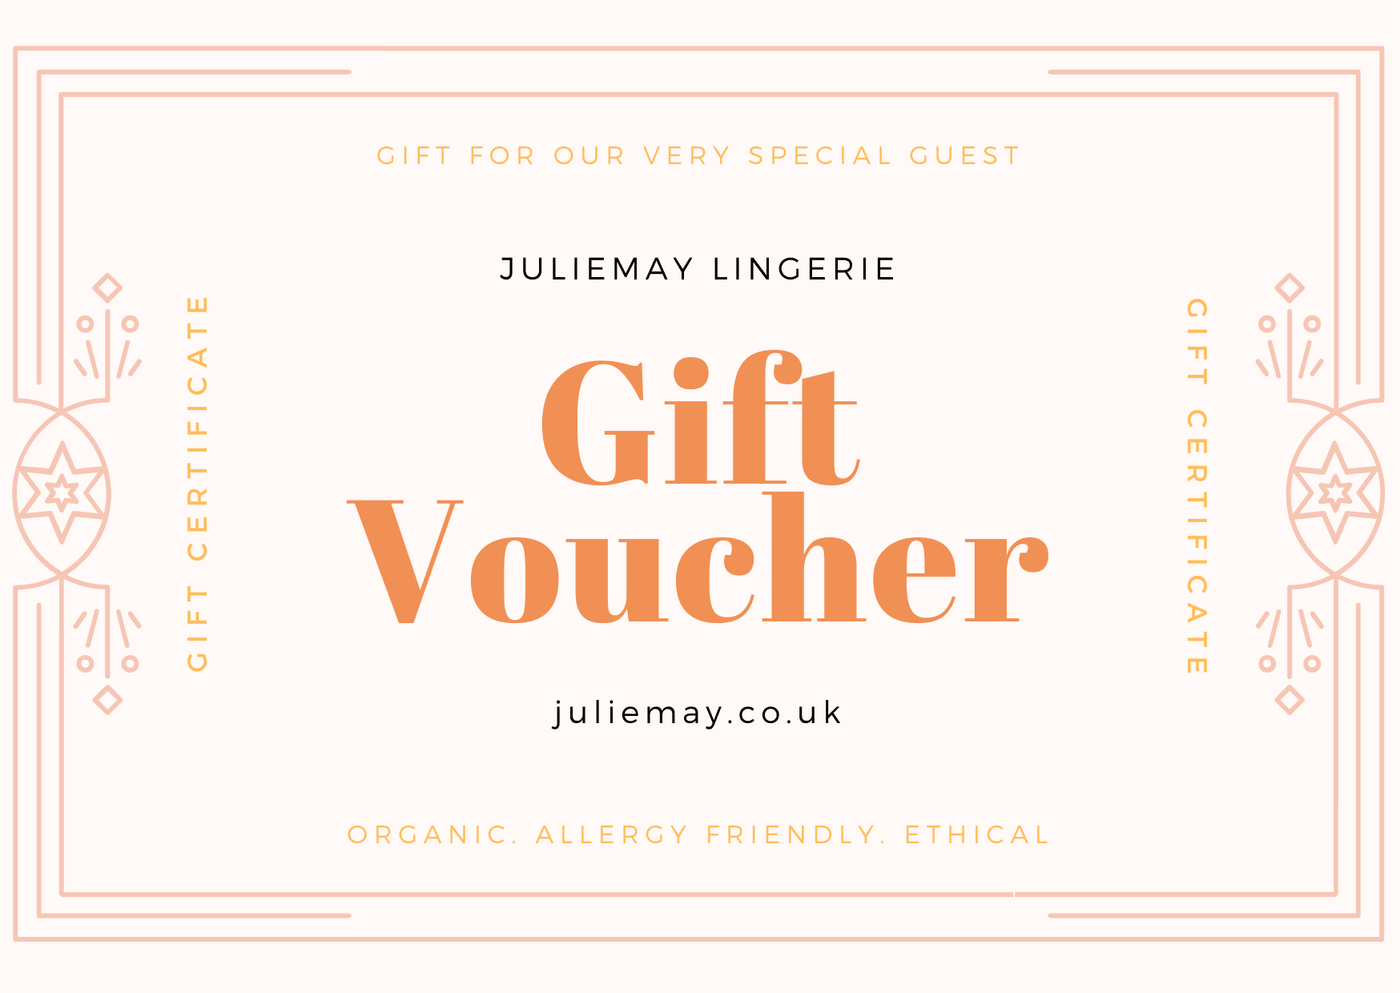 Juliemay Lingerie Gift Card - Juliemay Lingerie